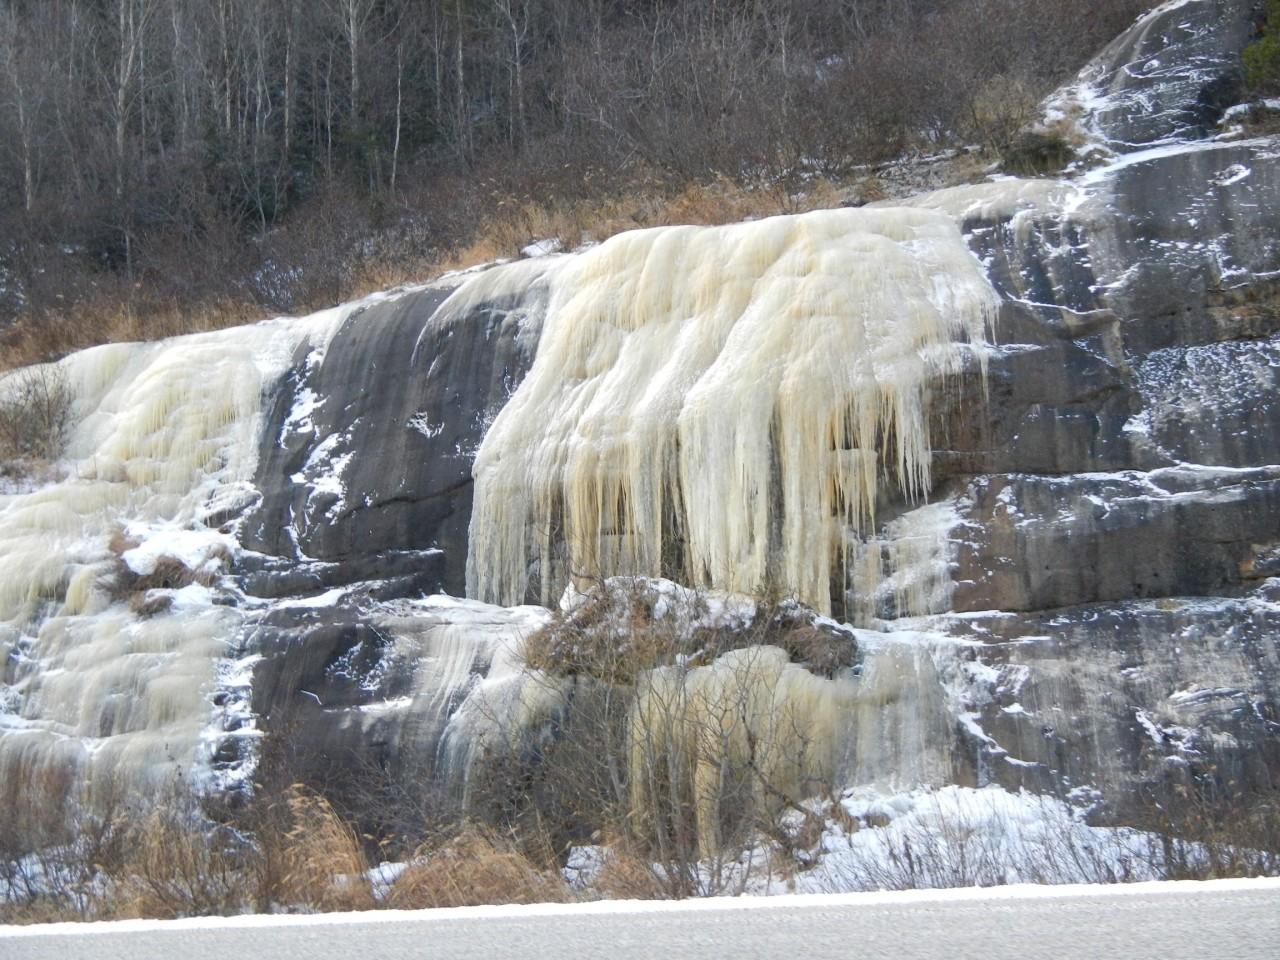 Ice forming on roadside rocks